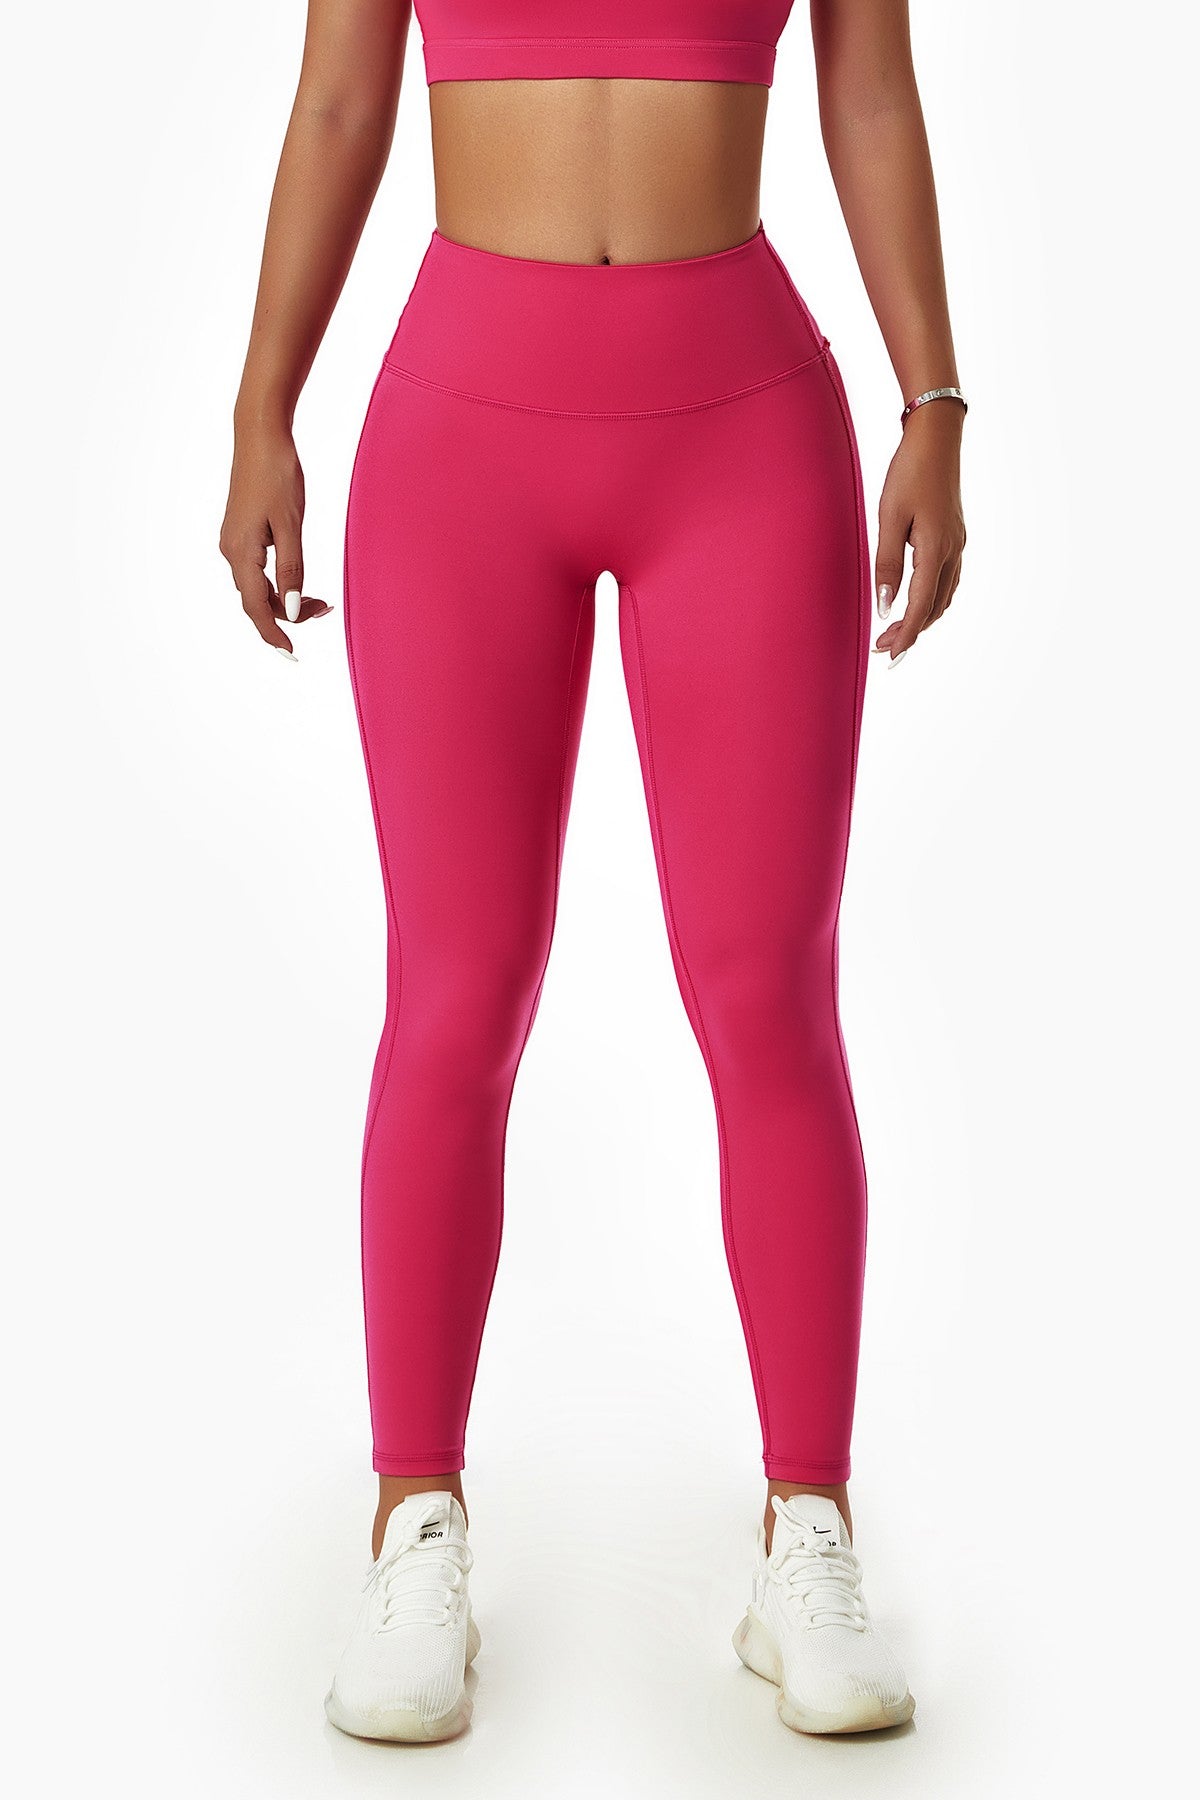 MRULIC yoga pants Seamless Butt Lifting Workout Leggings for Women High  Waist Yoga Pants Purple + S 